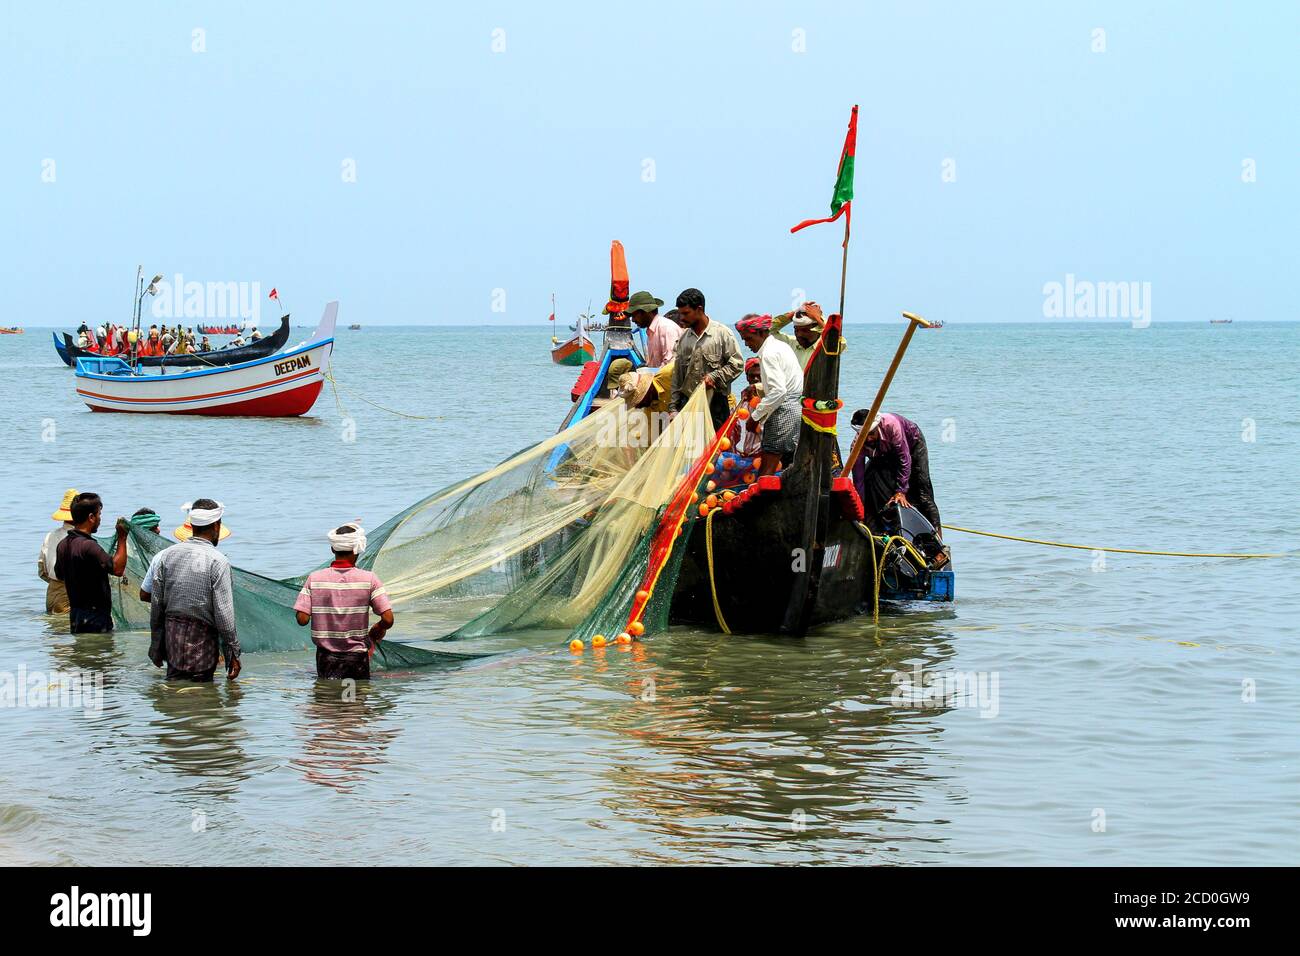 https://c8.alamy.com/comp/2CD0GW9/life-of-traditional-fishing-people-in-kerala-wooden-fisherman-boat-fisherman-throwing-the-net-in-the-seashore-fisherman-repairs-fishing-net-2CD0GW9.jpg